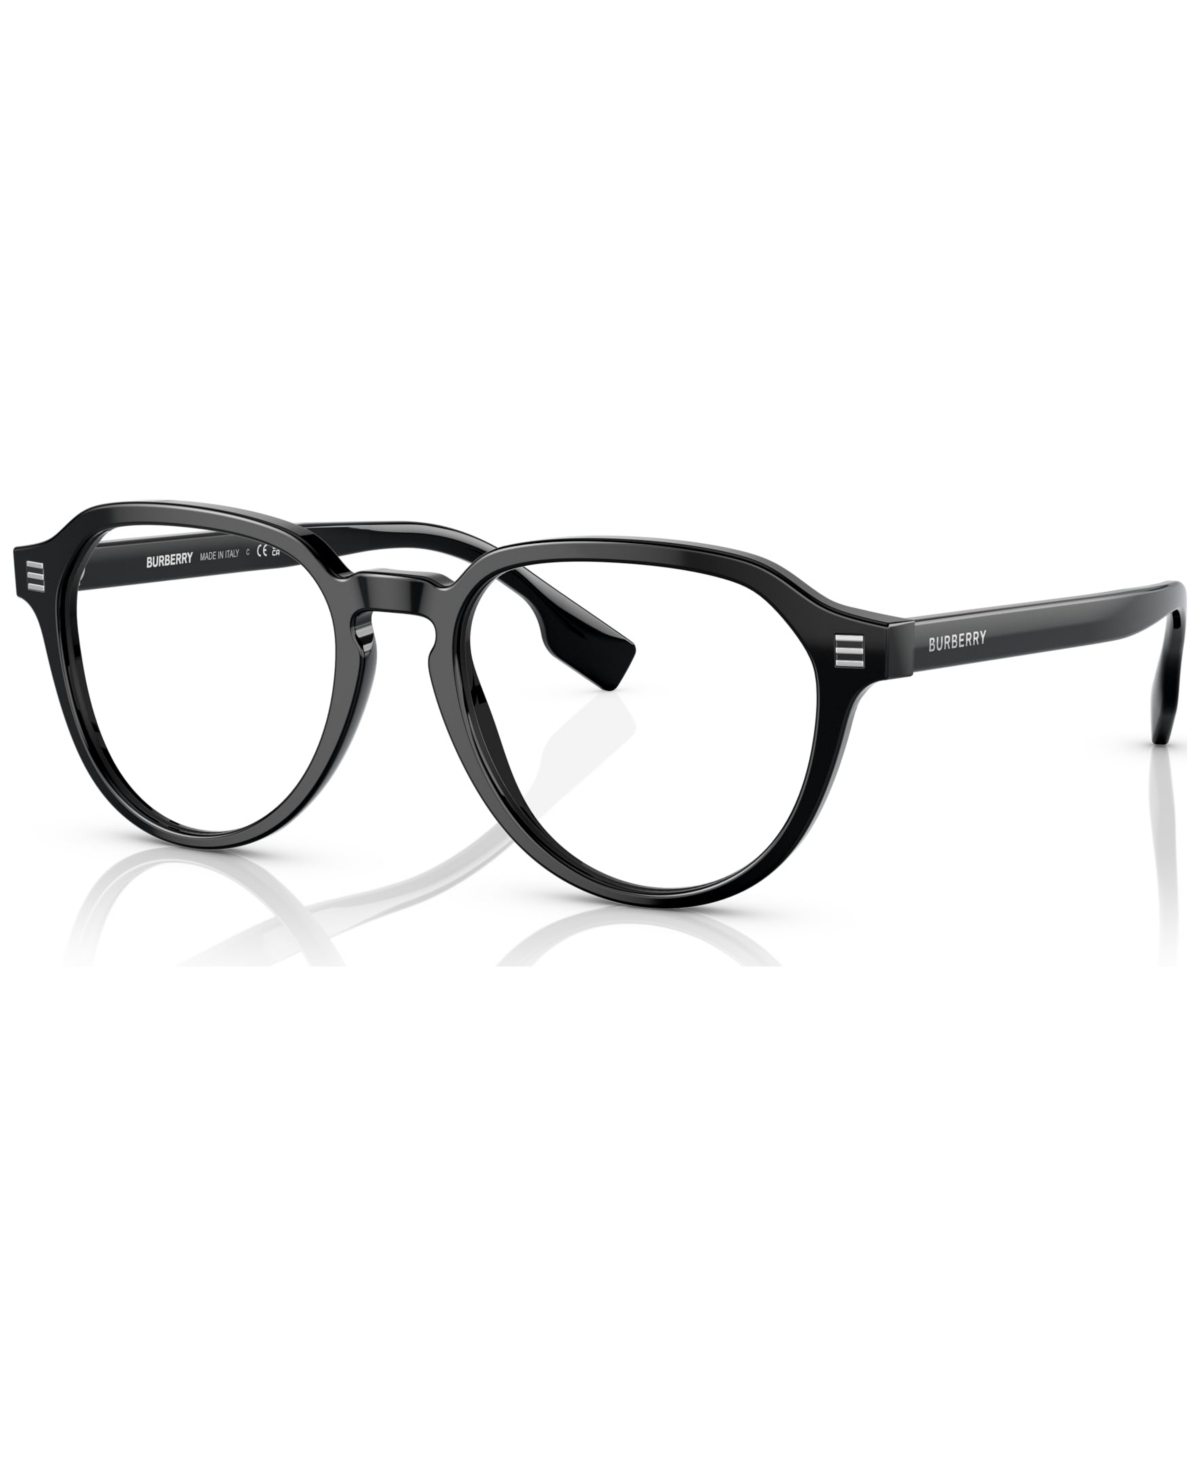 Men's Phantos Eyeglasses, BE236852-o - Black